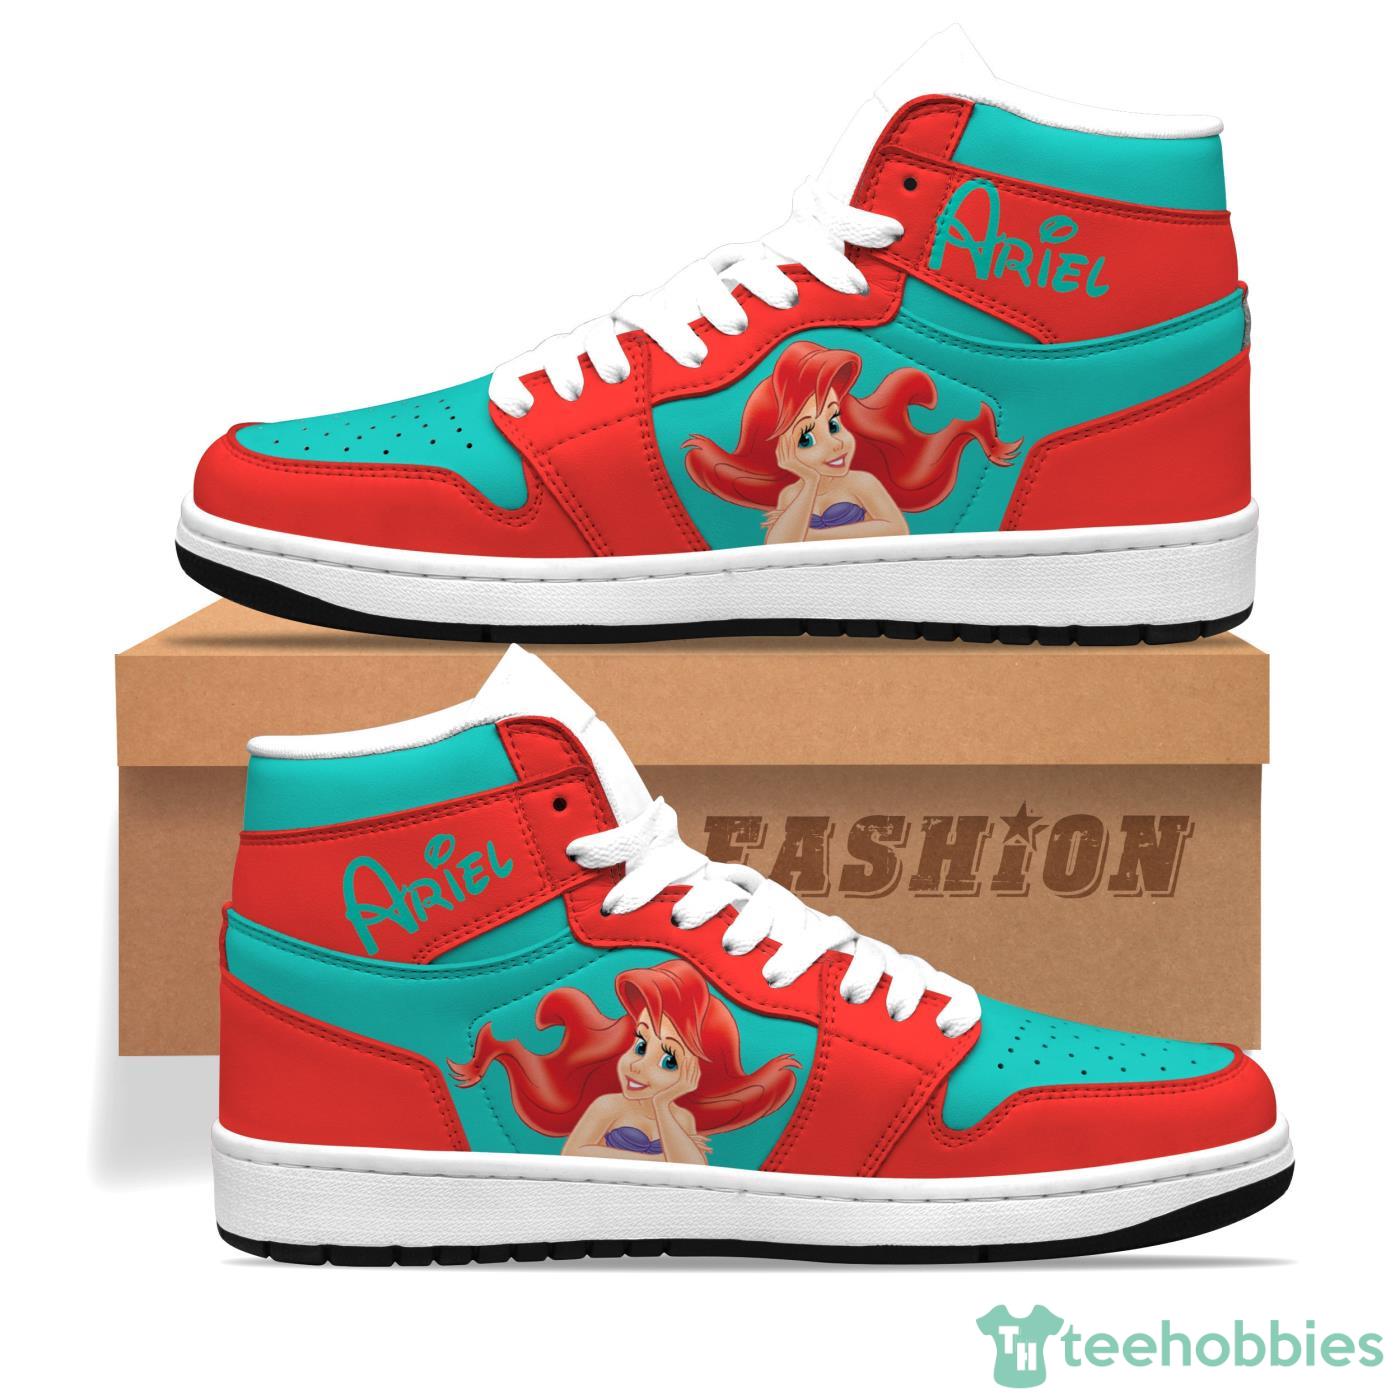 Ariel Mermaid Red Green Sneaker Boots Disney Air Jordan Hightop Shoes Product Photo 1